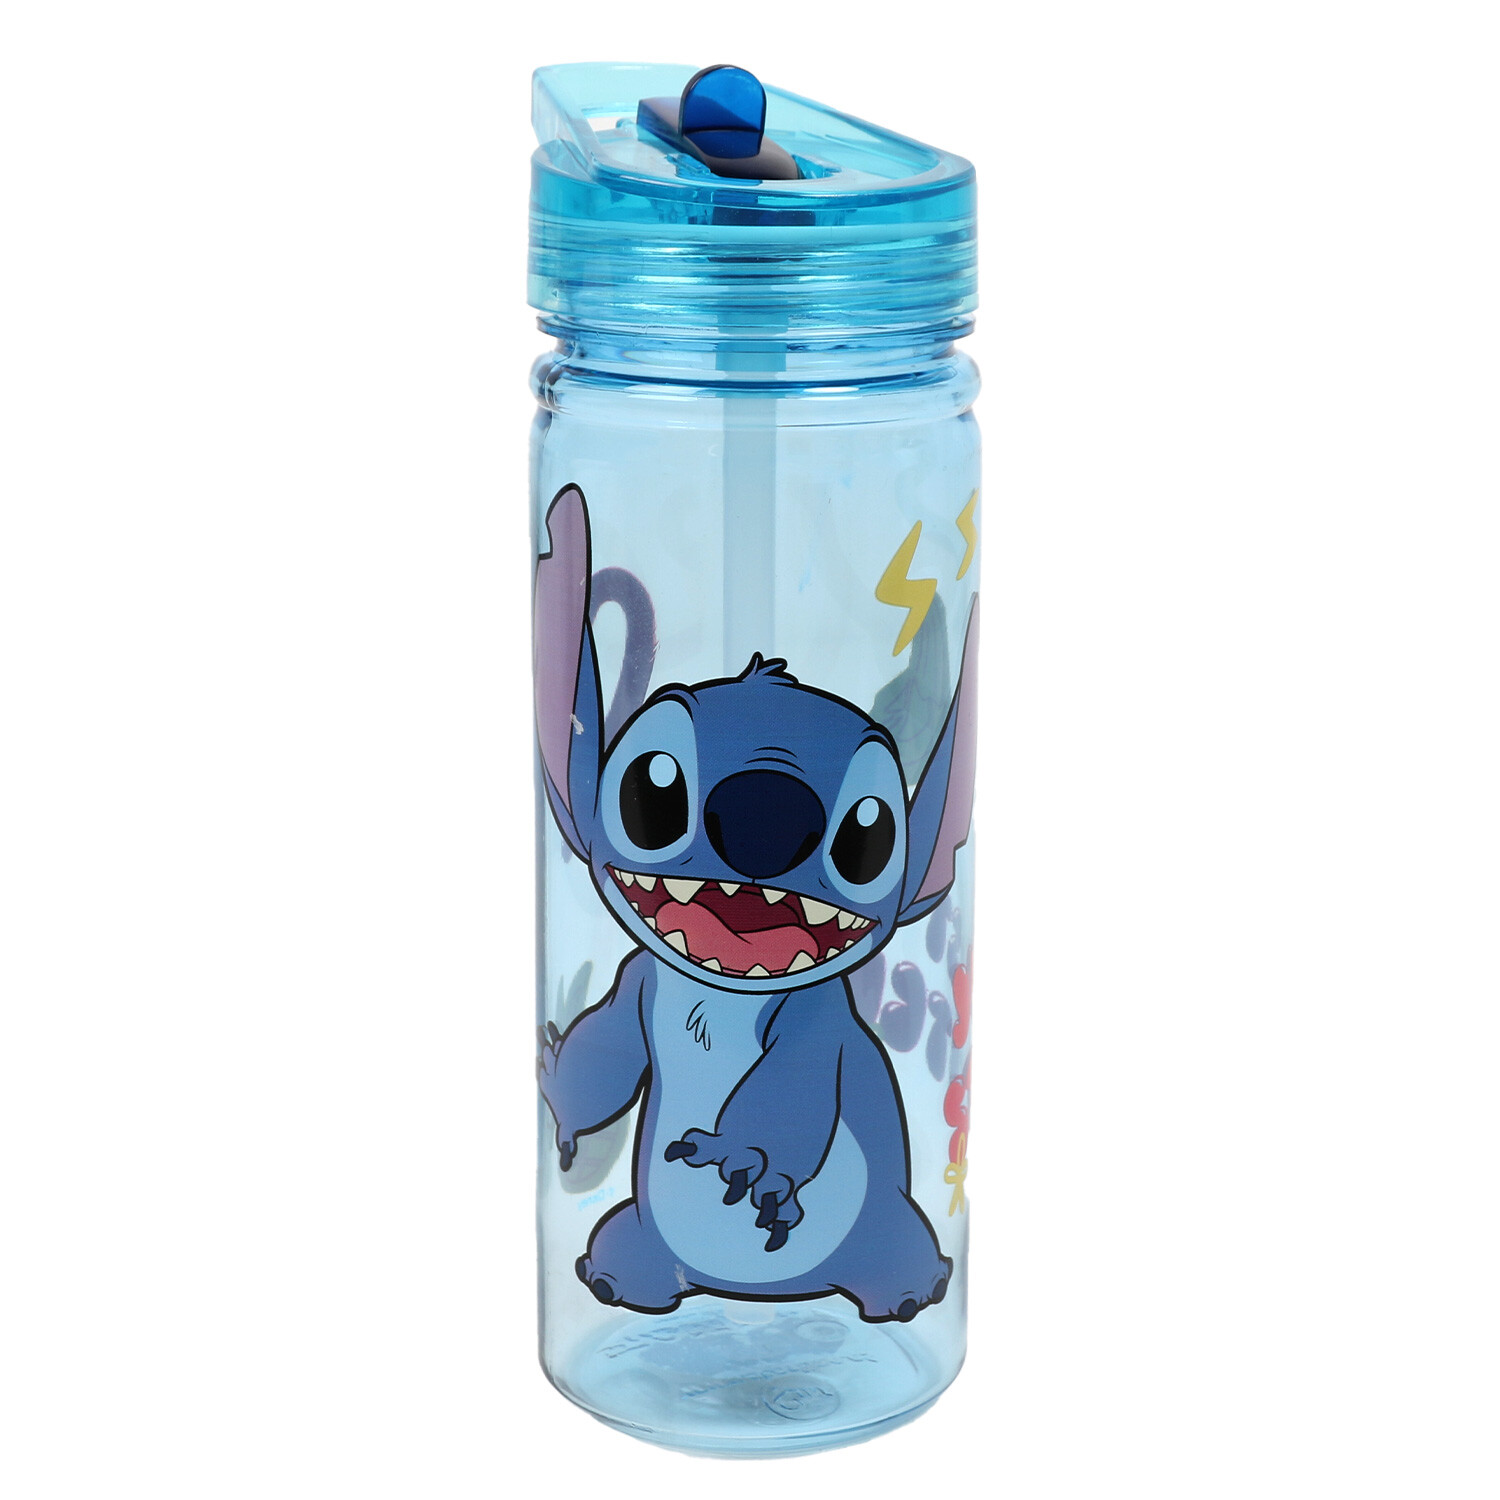 Lilo and Stitch Ecozen Water Bottle - Blue Image 1